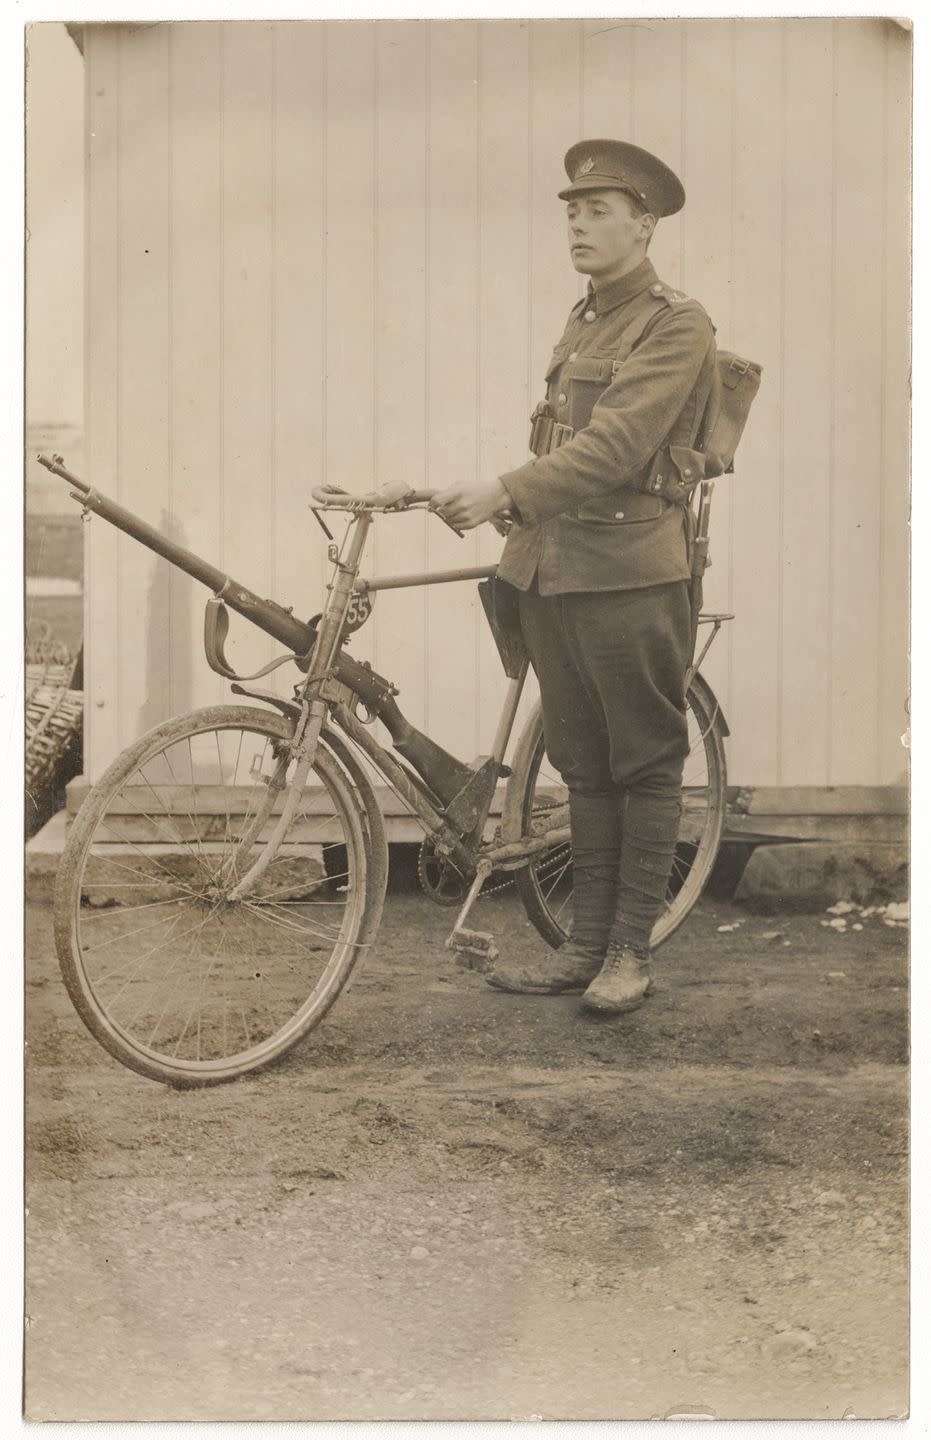 Armies Issued Their Own Bikes